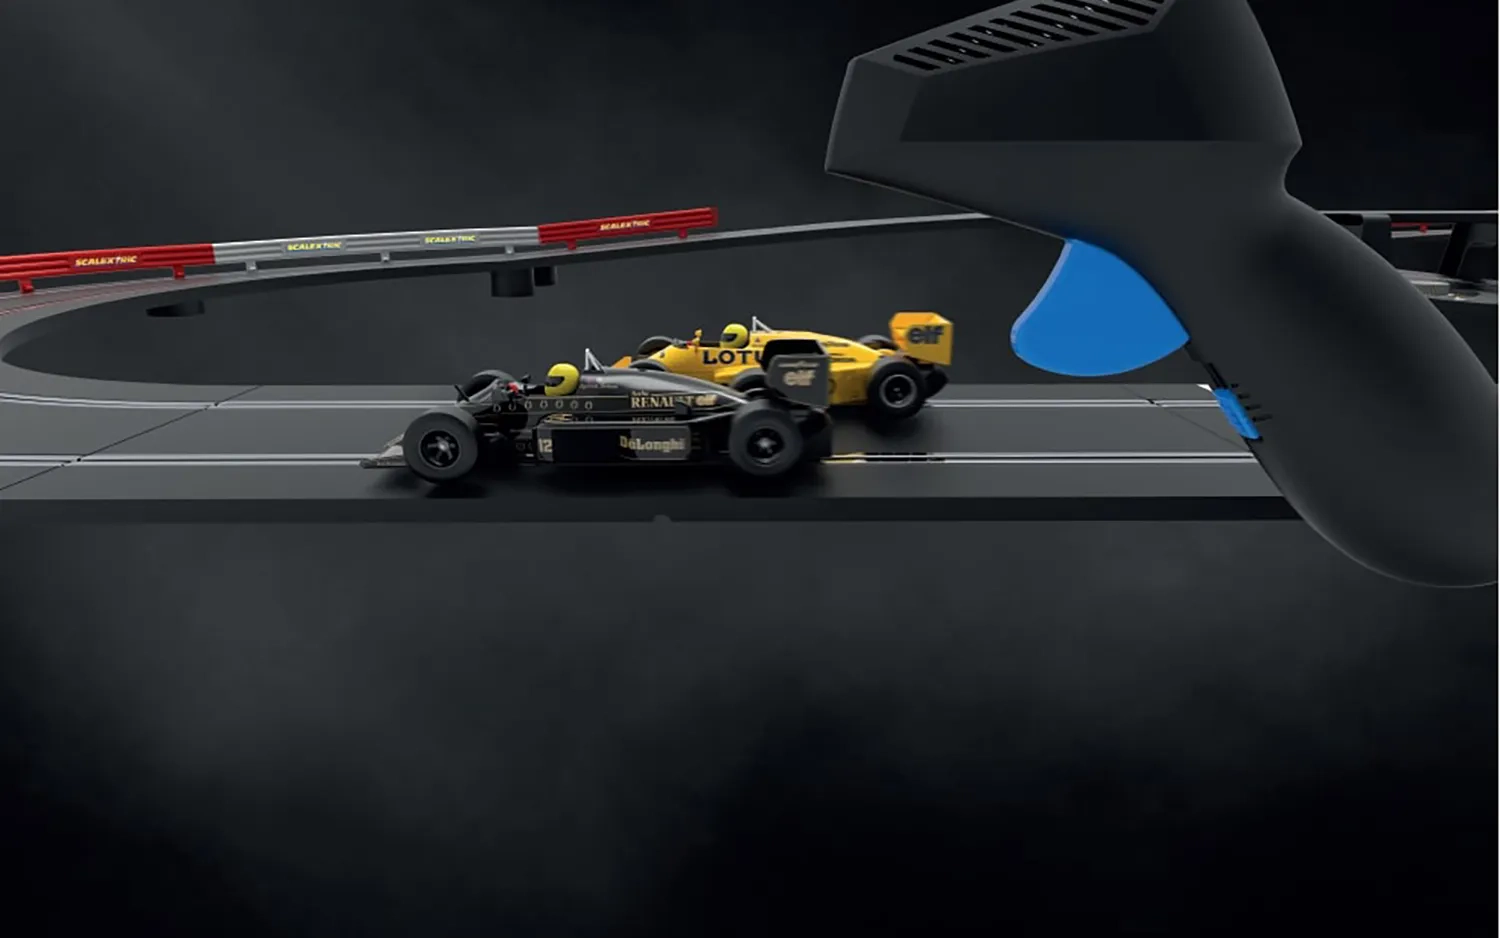 Scalextric 1980s Grand Prix Race Set